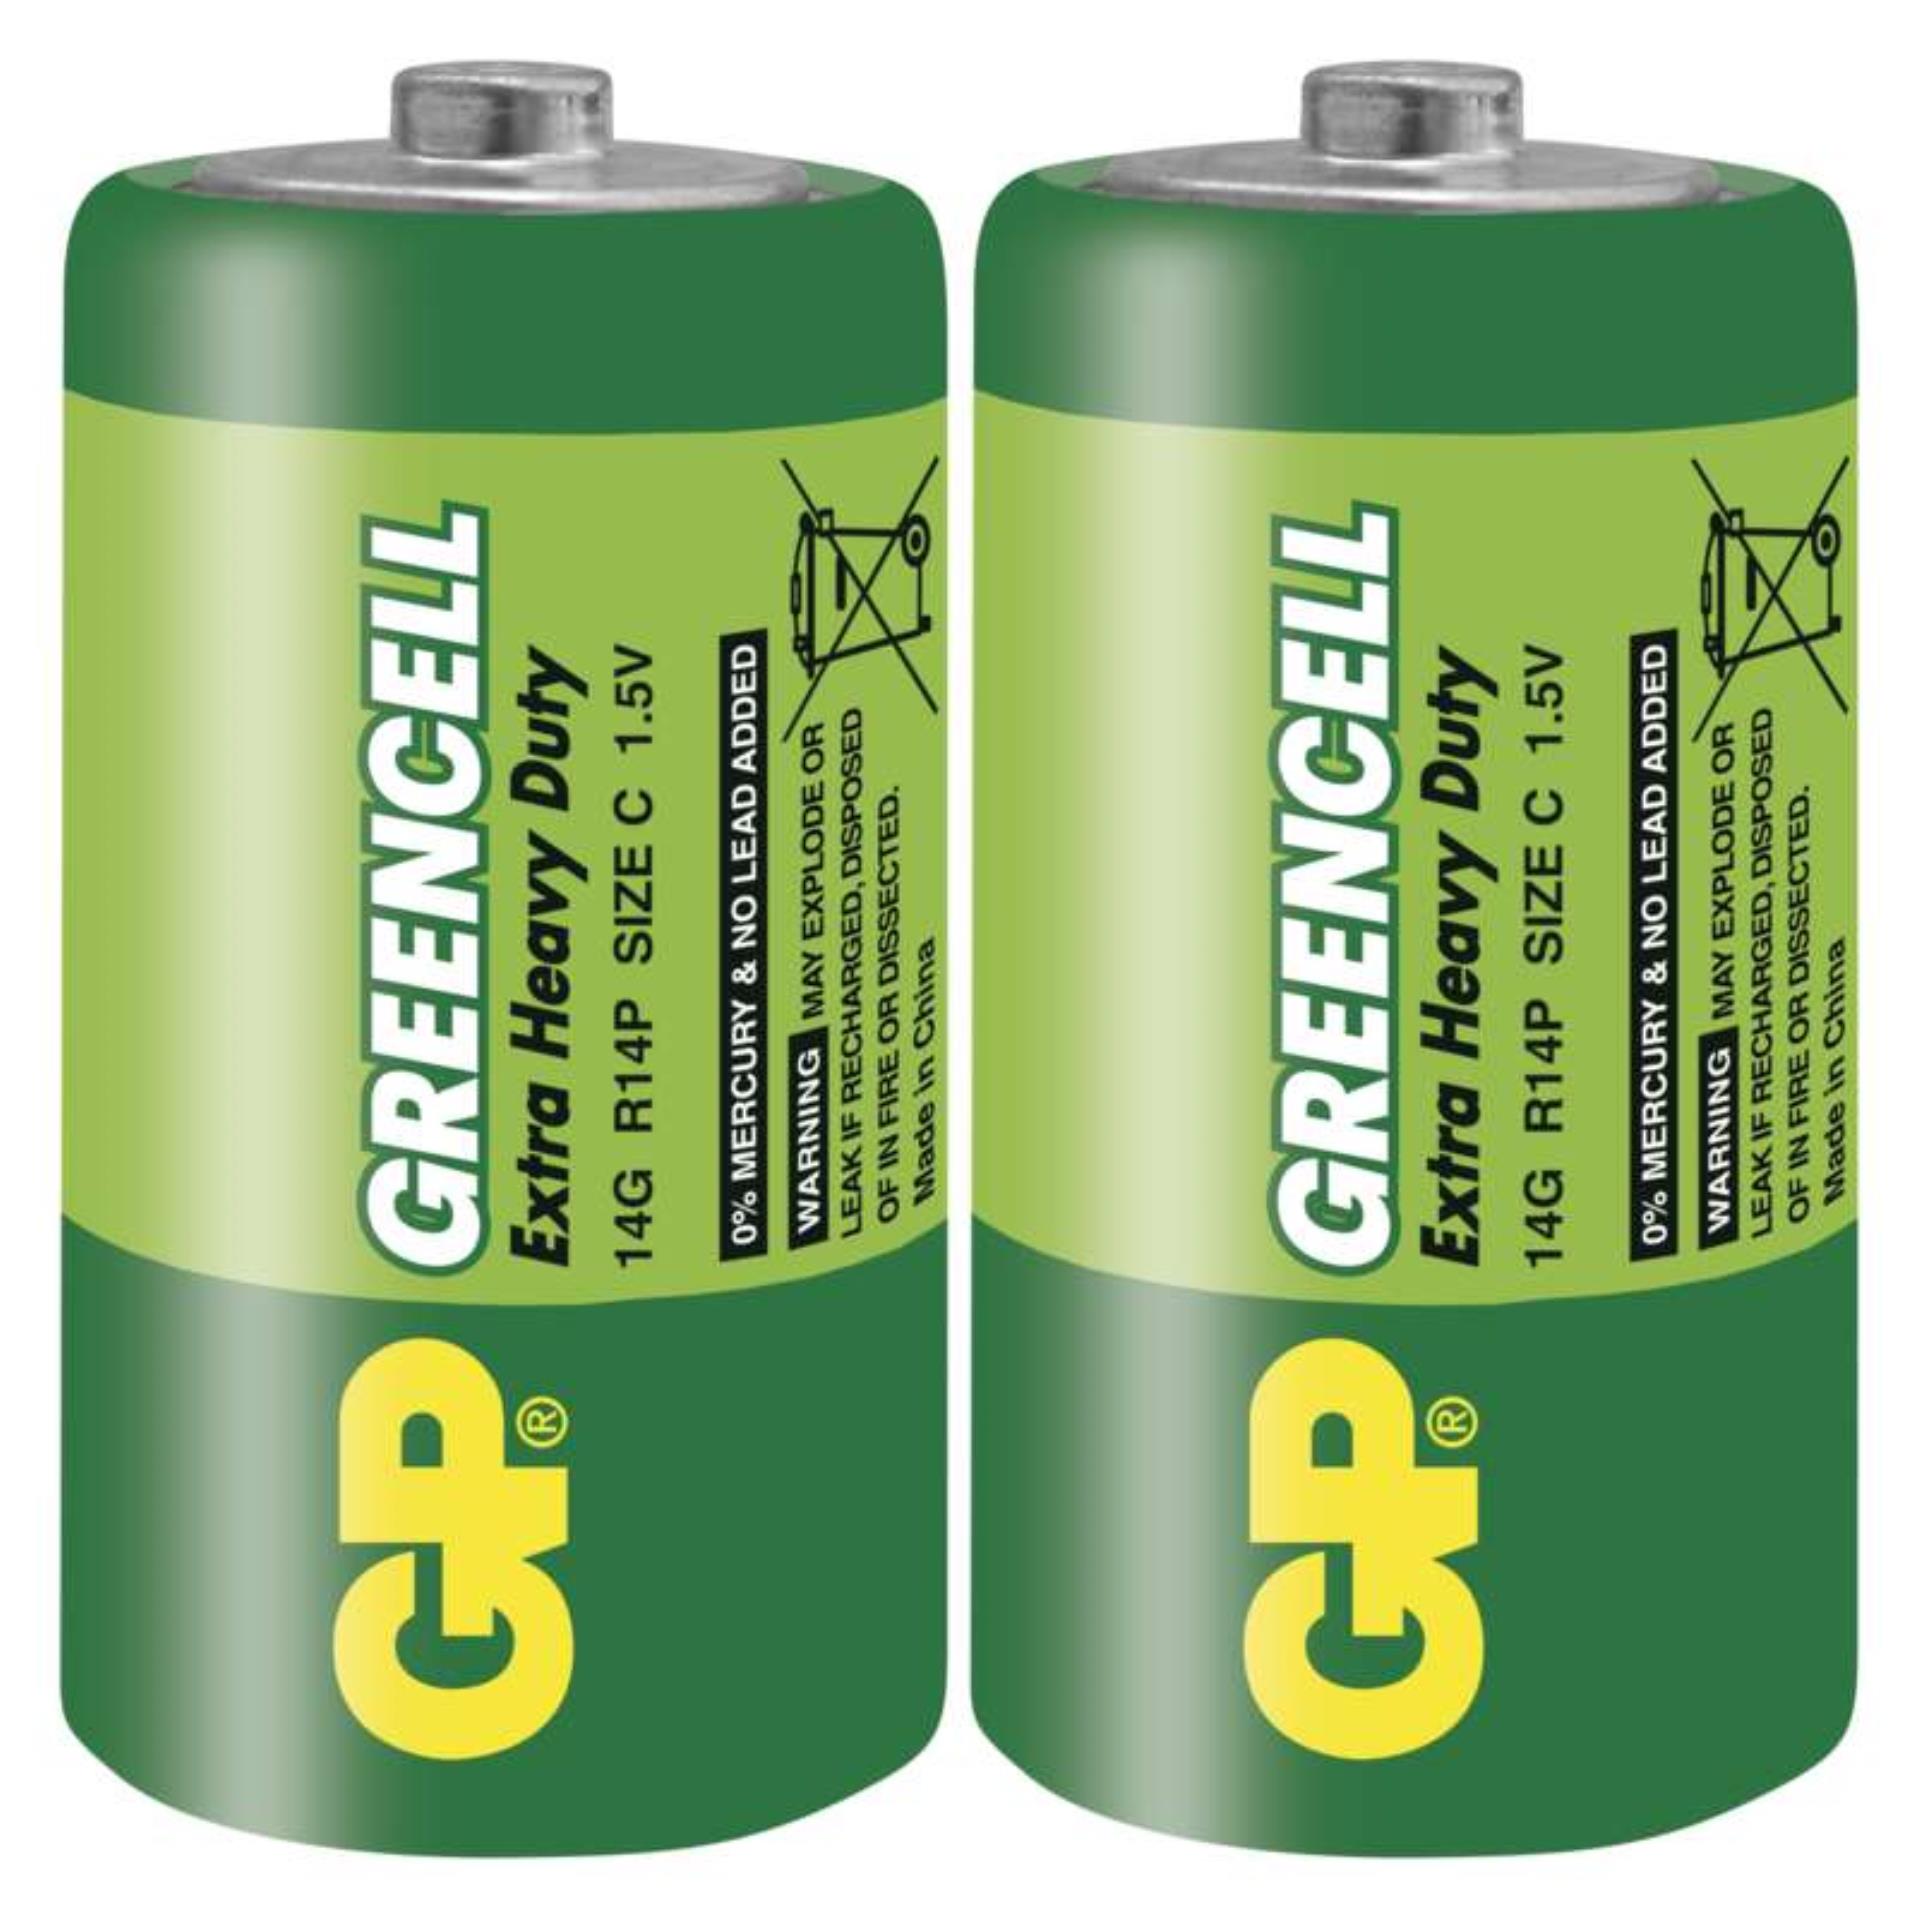 Baterie GP Greencell 1,5 V, R14, typ C, 2 ks